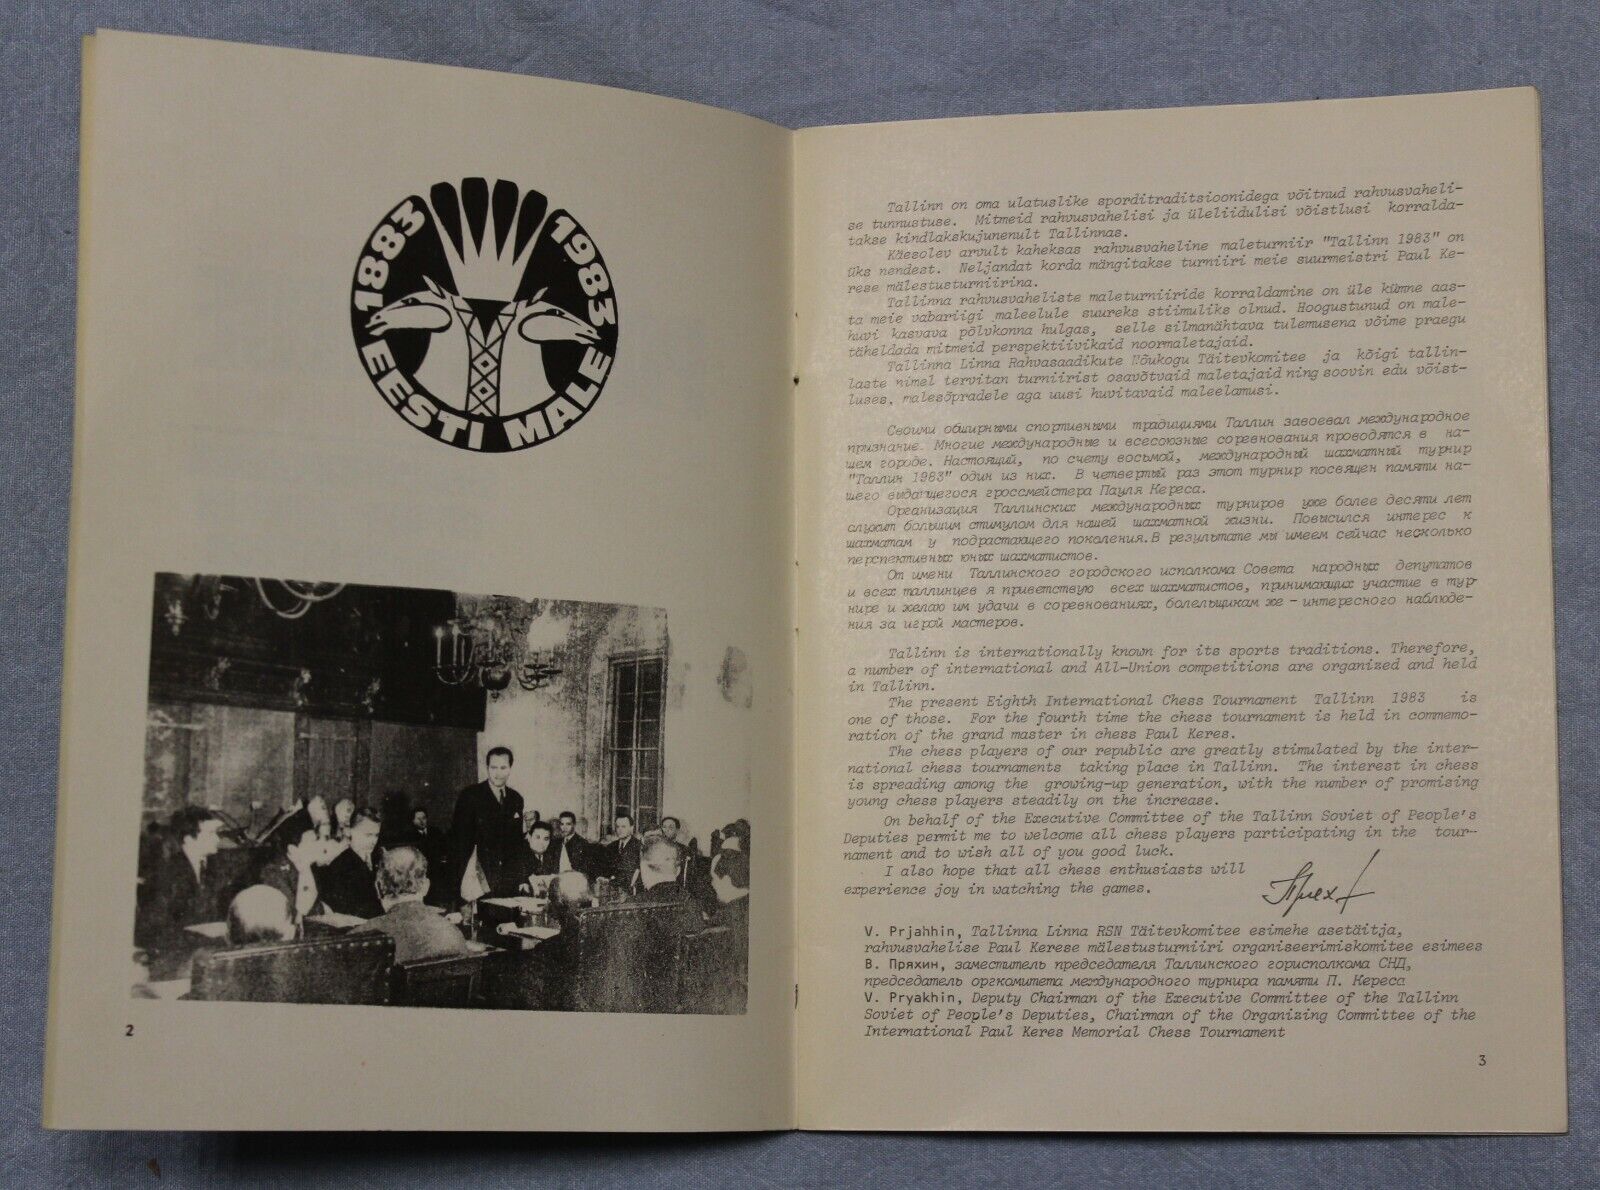 11086.Chess book: International Keres Memorial Tournament w Photos&Cancellation, 1983